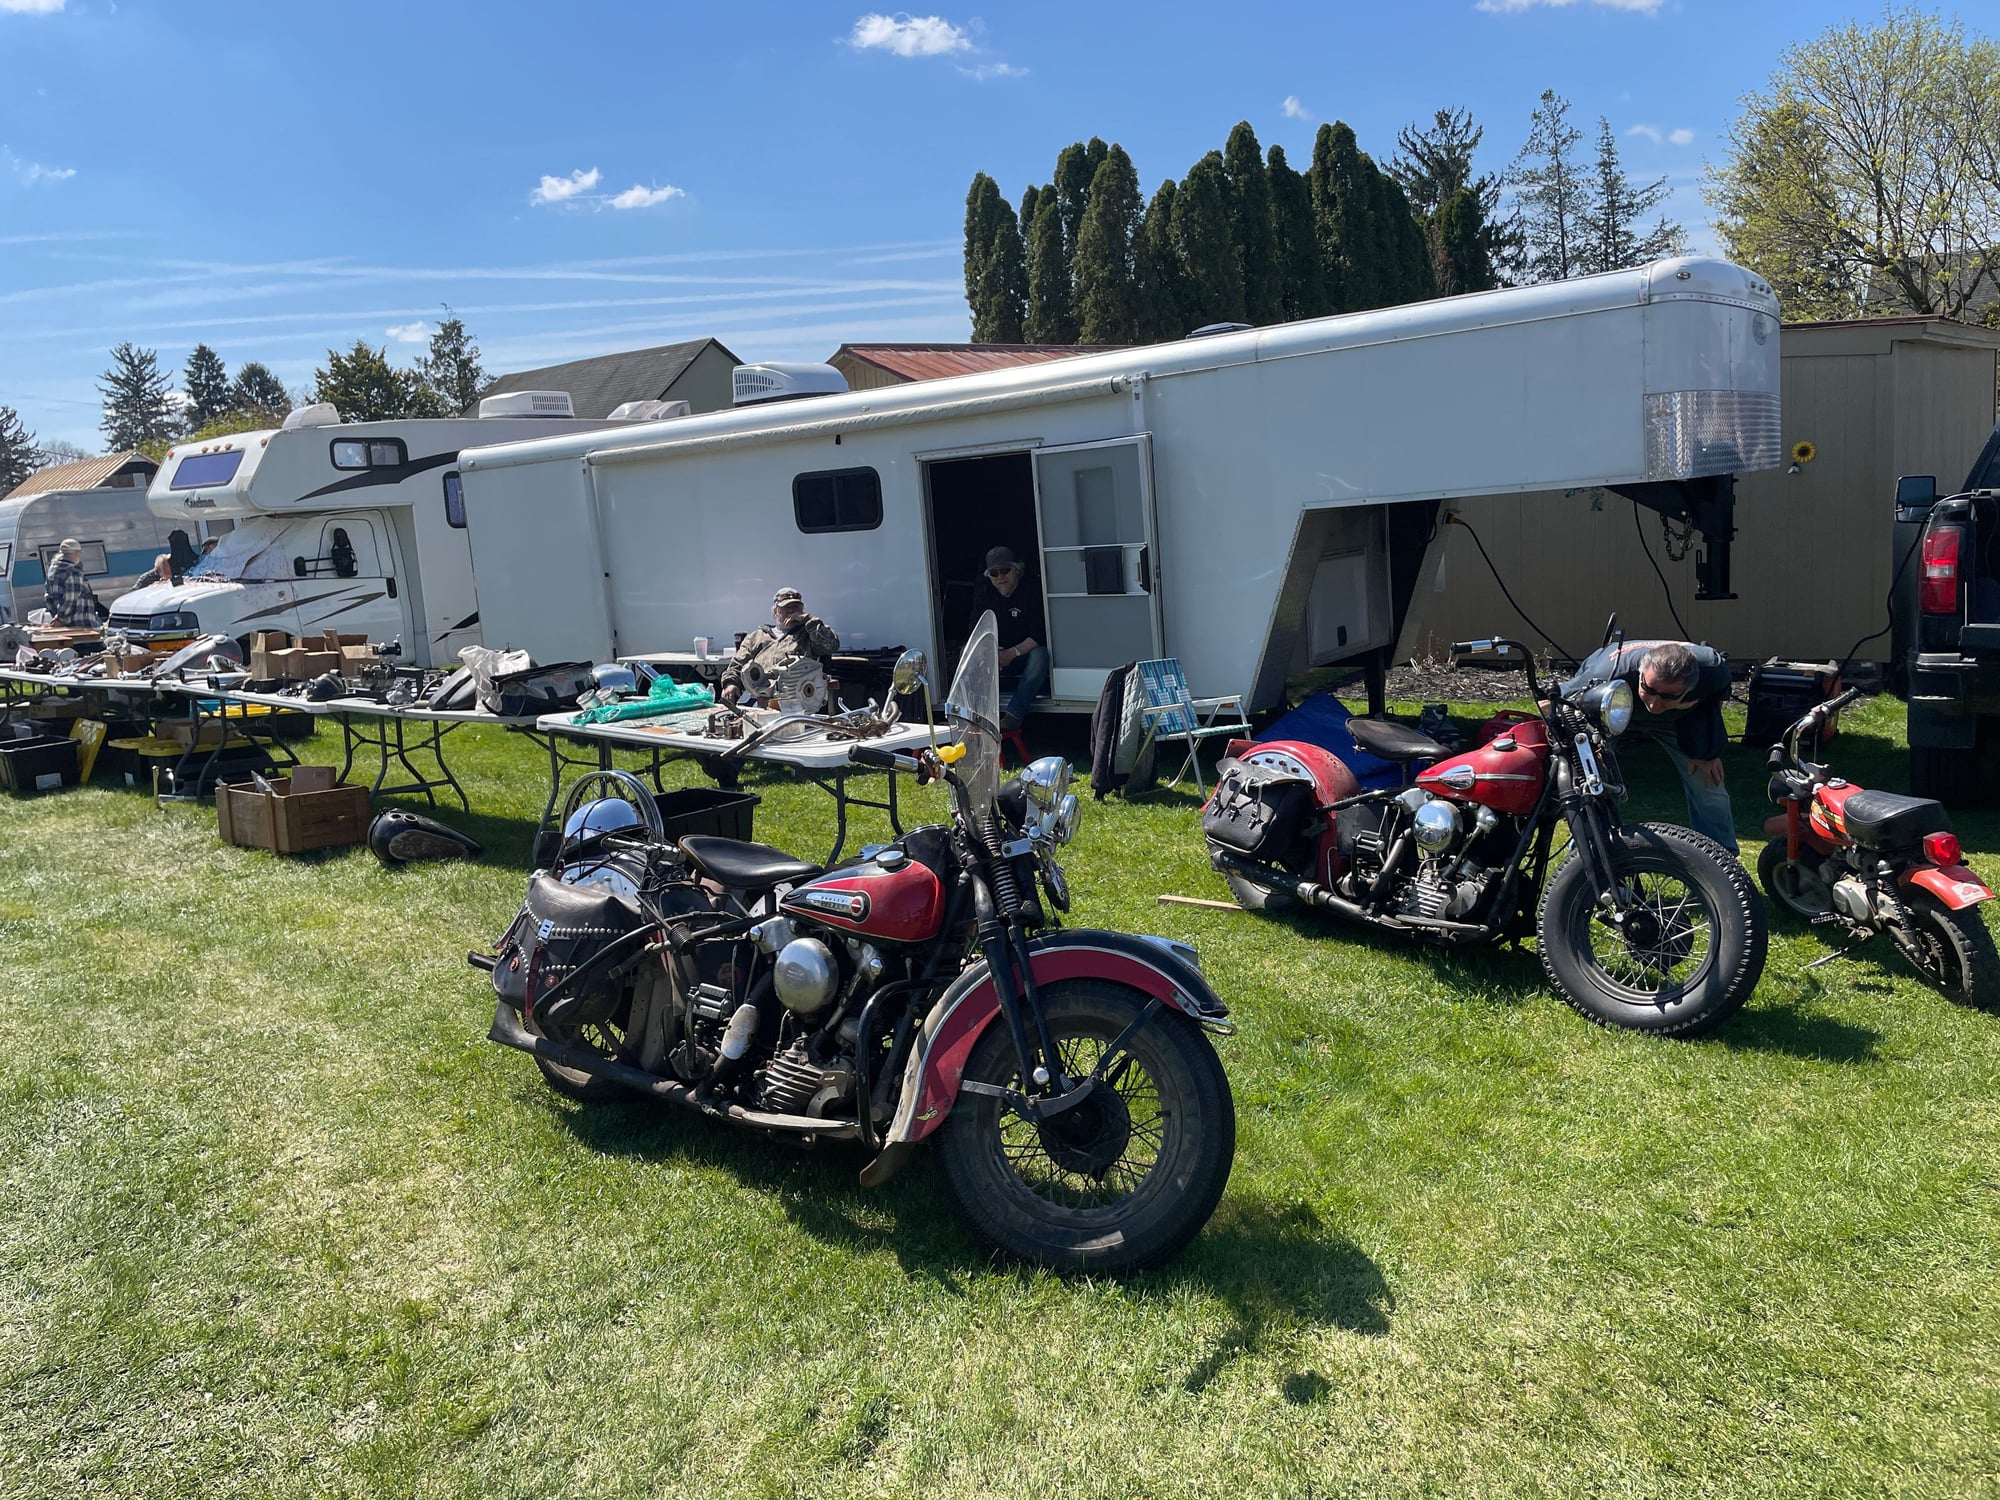 Oley PA swap meet ..pic heavy Harley Davidson Forums